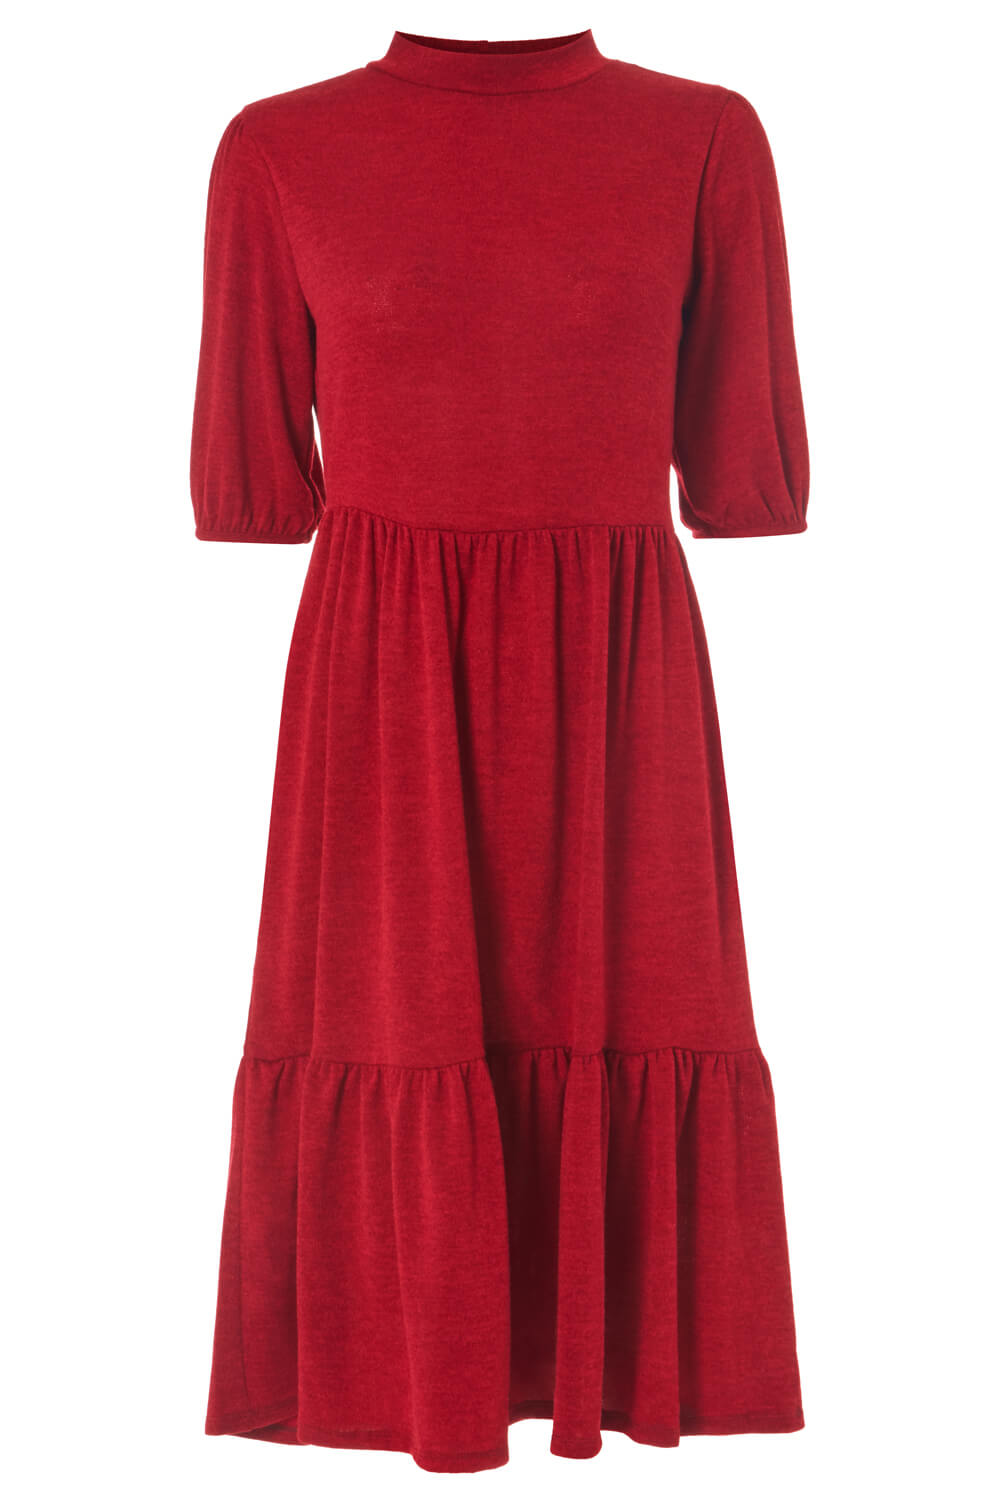 Wine Puff Sleeve Knitted Midi Dress, Image 4 of 4